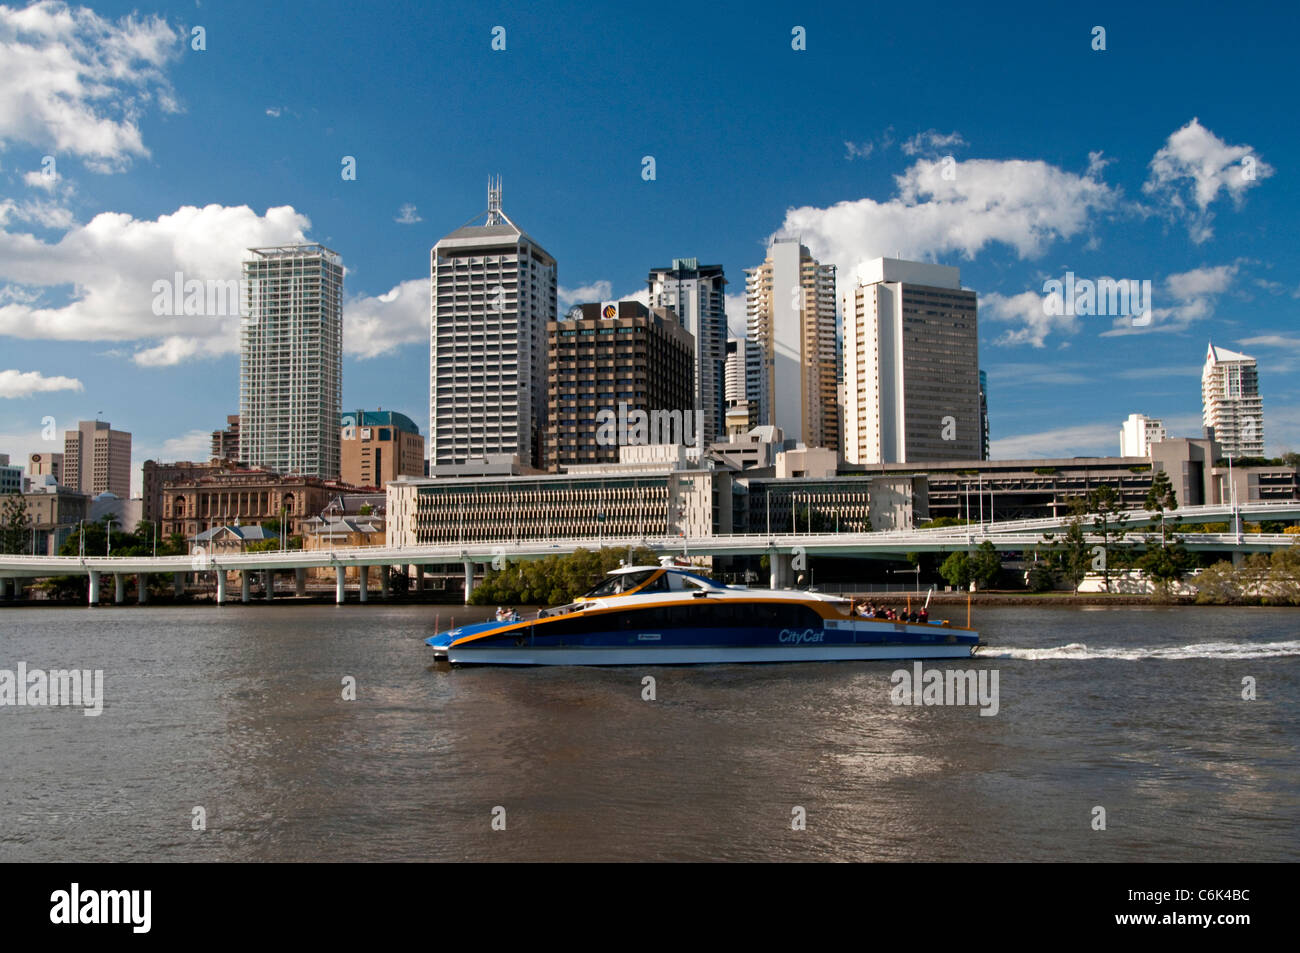 City Cat Ferry on the Brisbane River with Brisbane city skyline, Queensland,  Australia Stock Photo